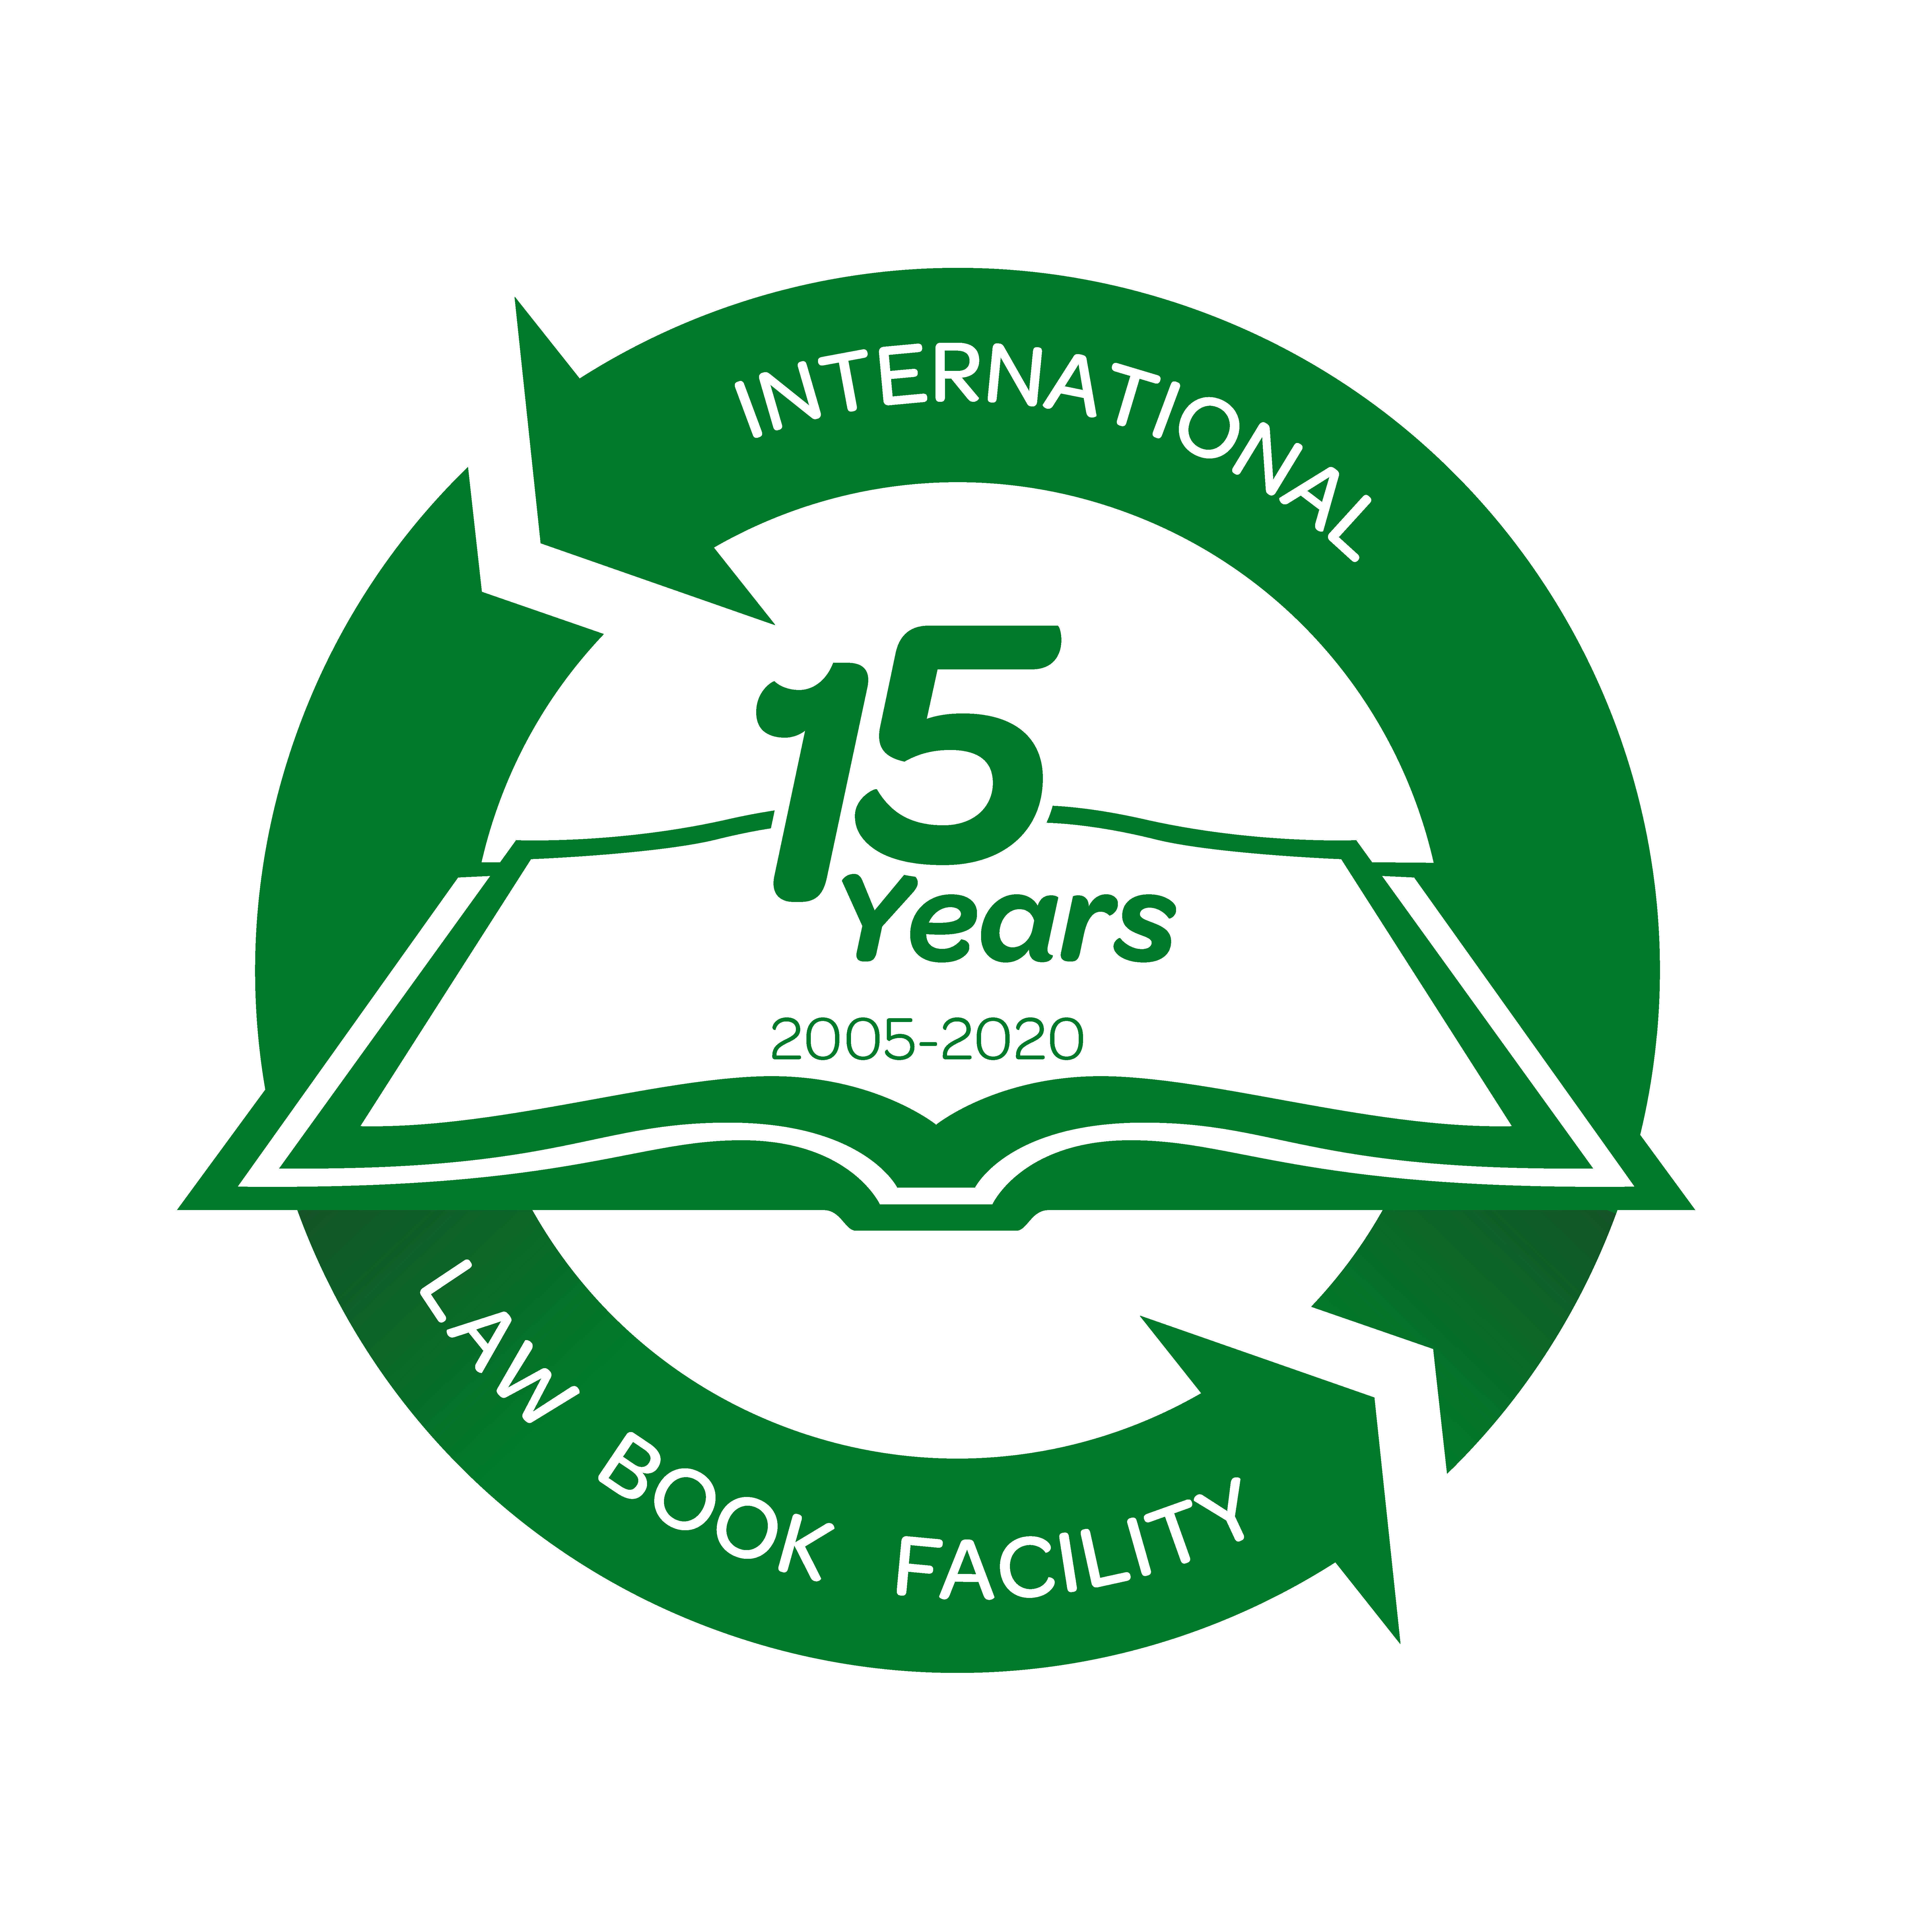 law book facility logo